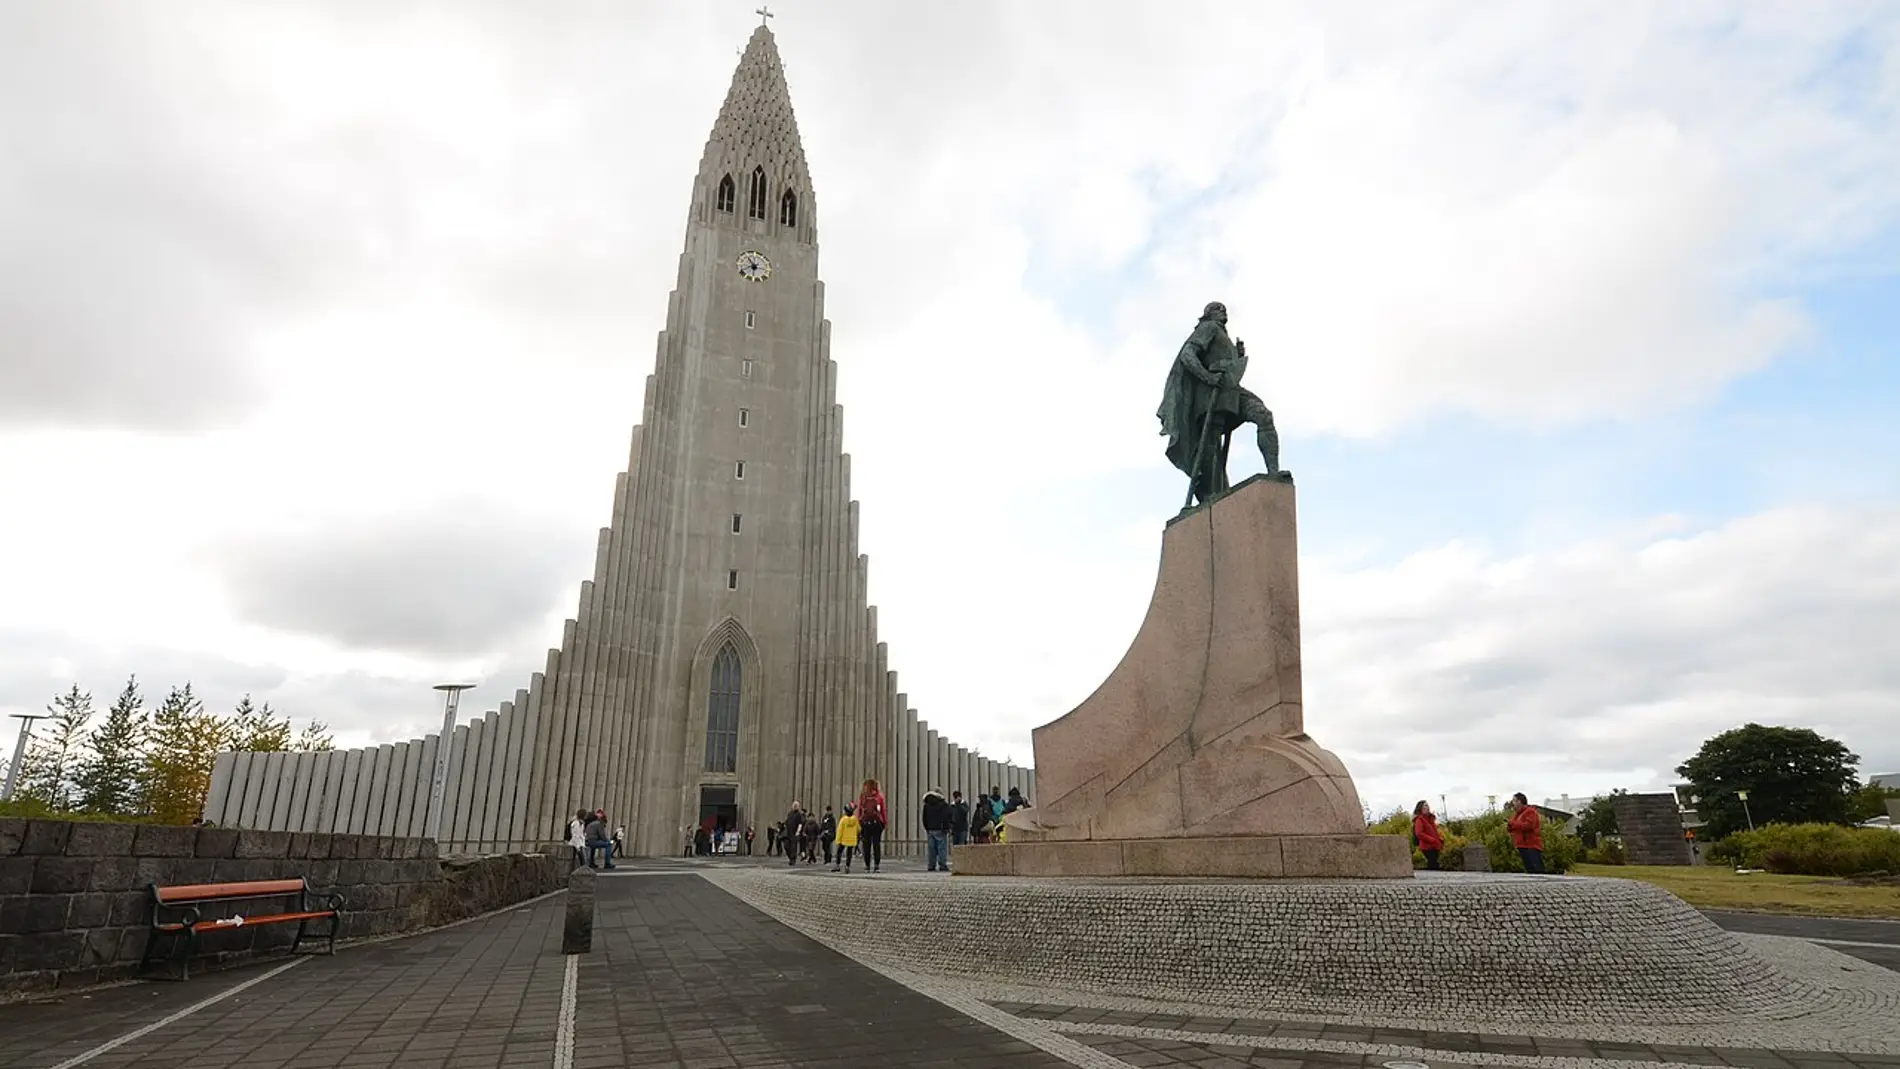 Descubre Hallgrímskirkja, la iglesia de Reikiavik que se ha convertido en un símbolo de la capital de Islandia